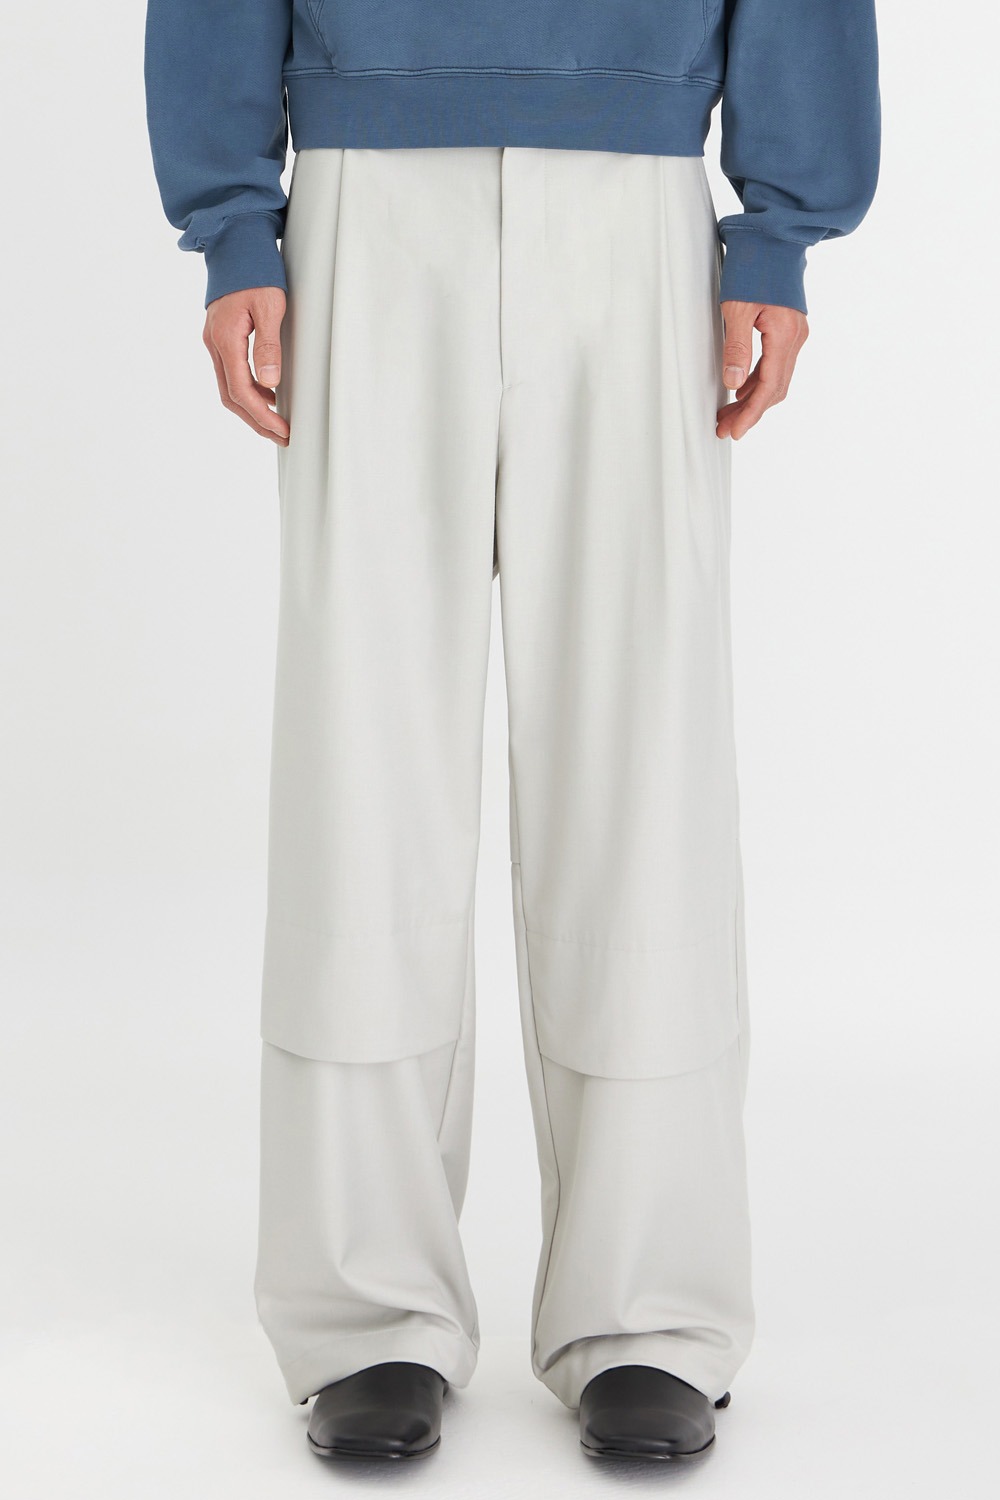 Layer Pants V2 - Light Grey